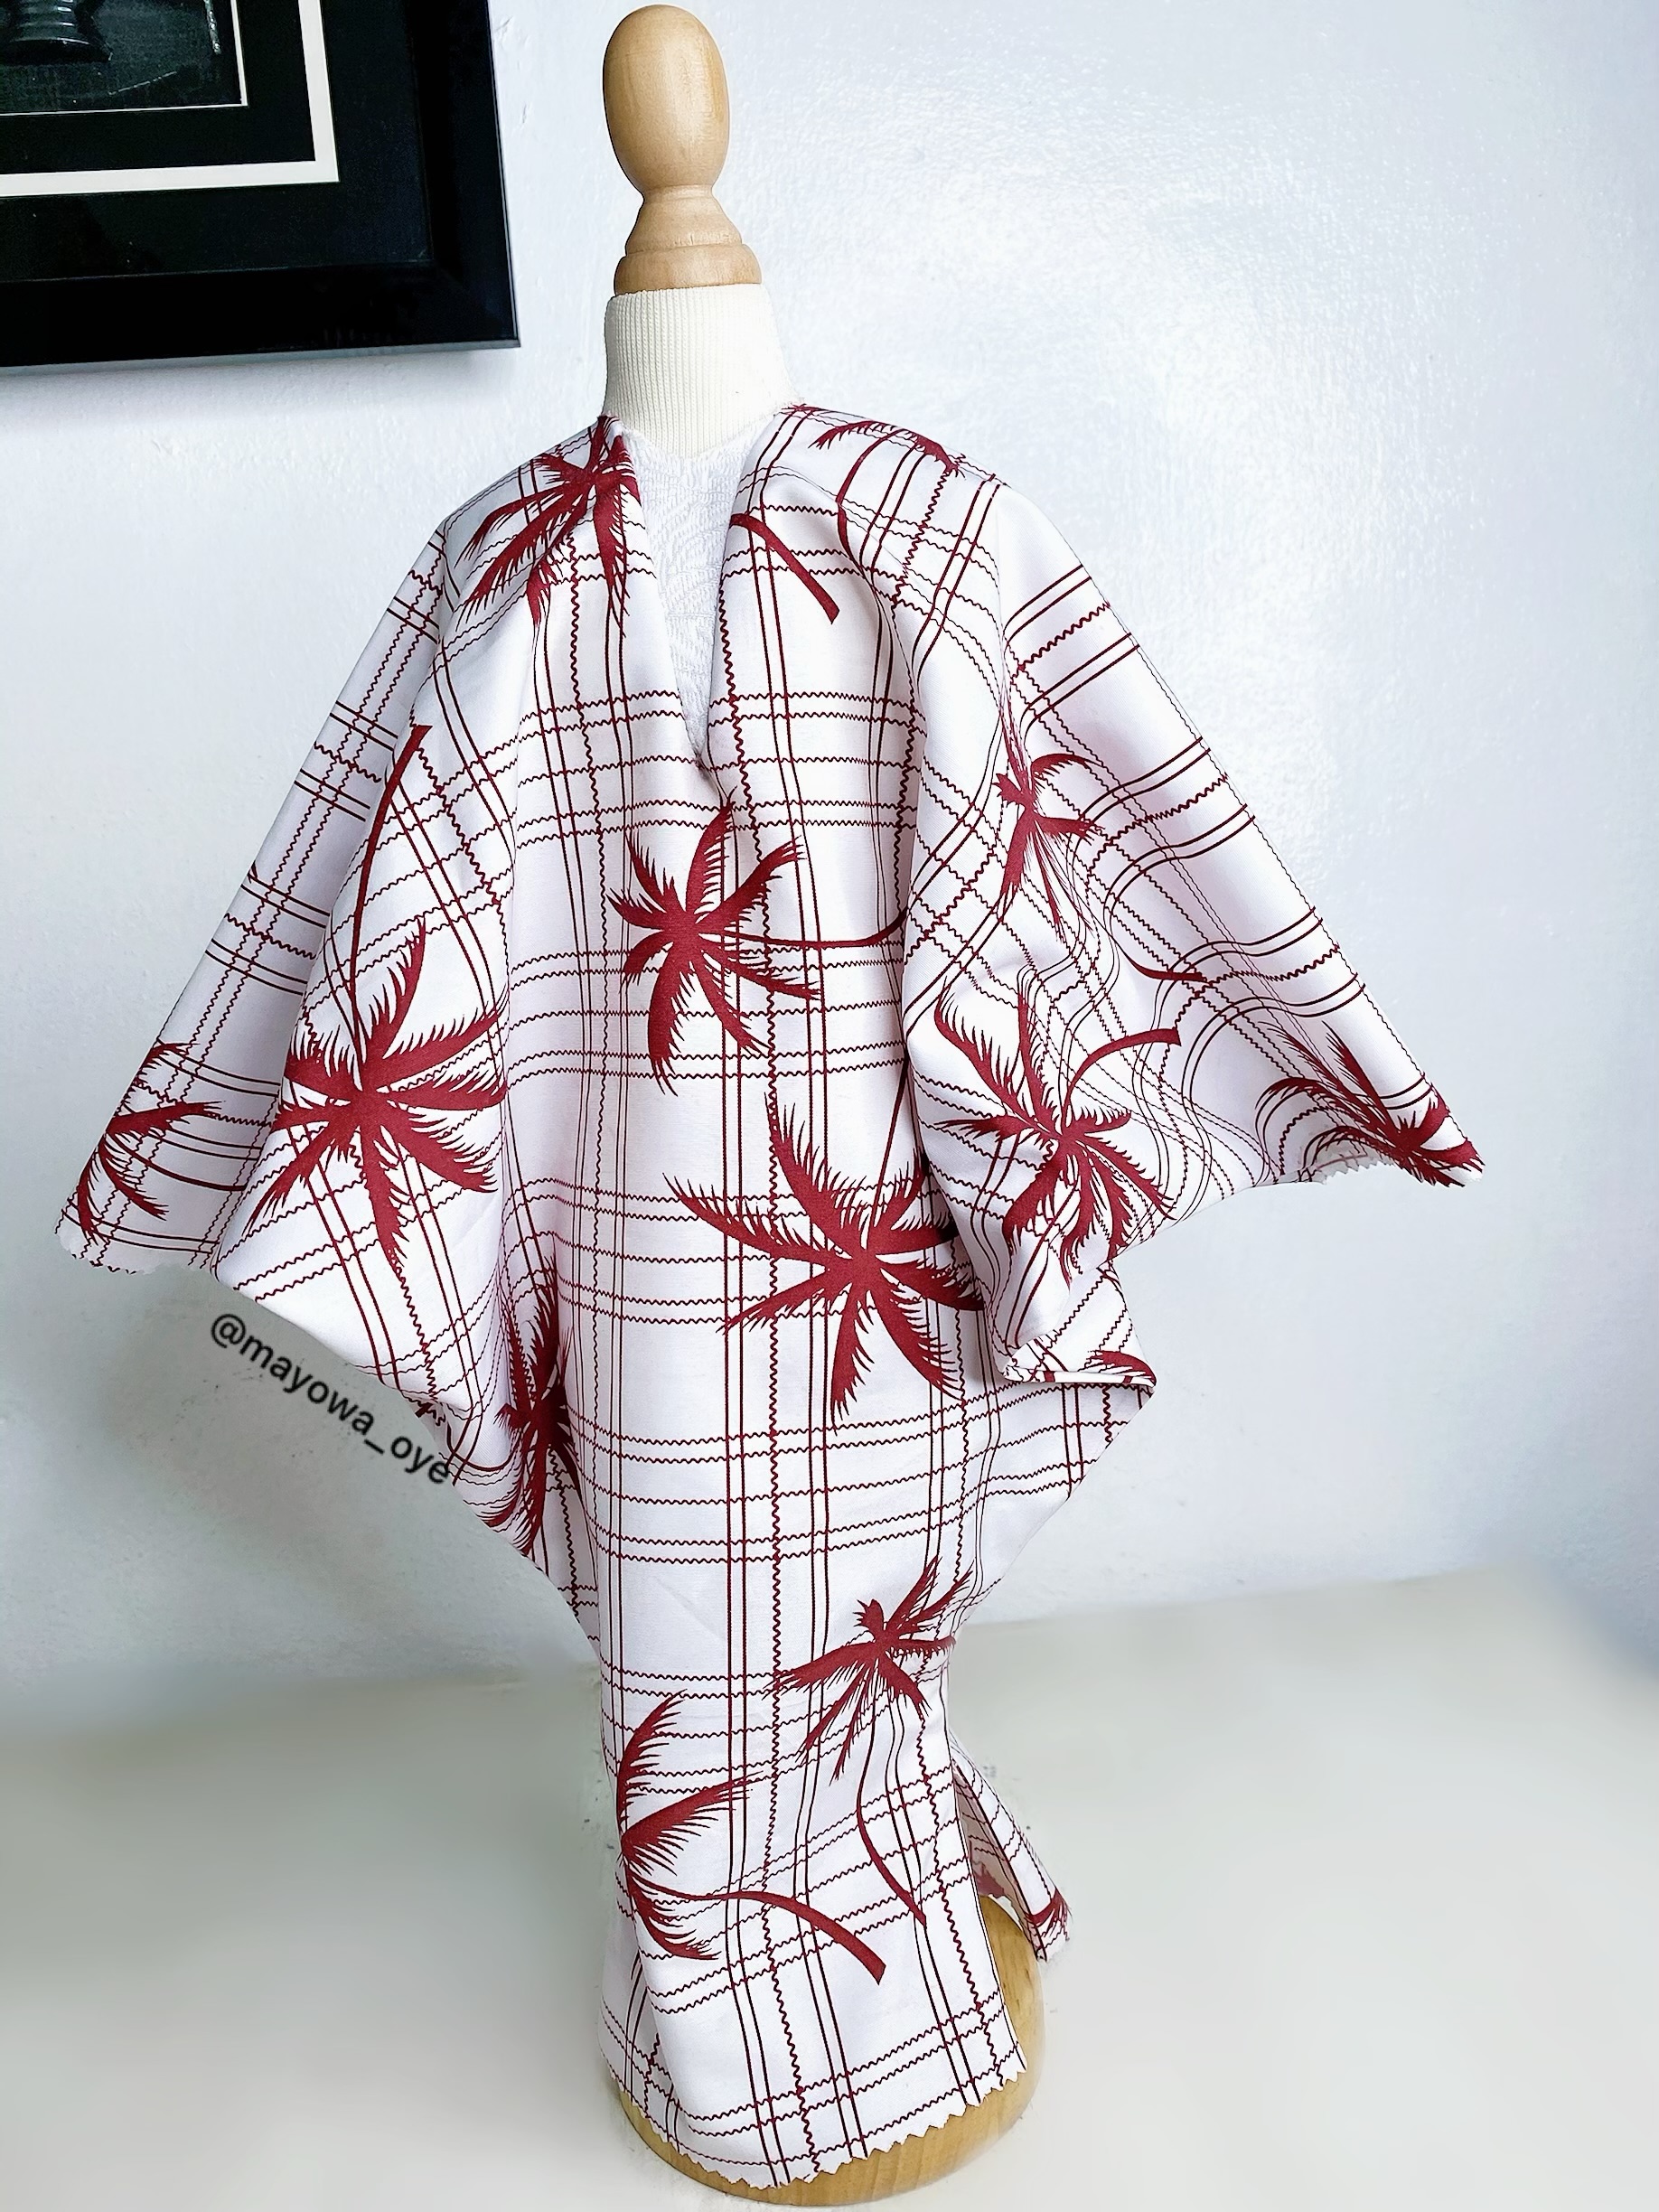 Kimono dress inspiration